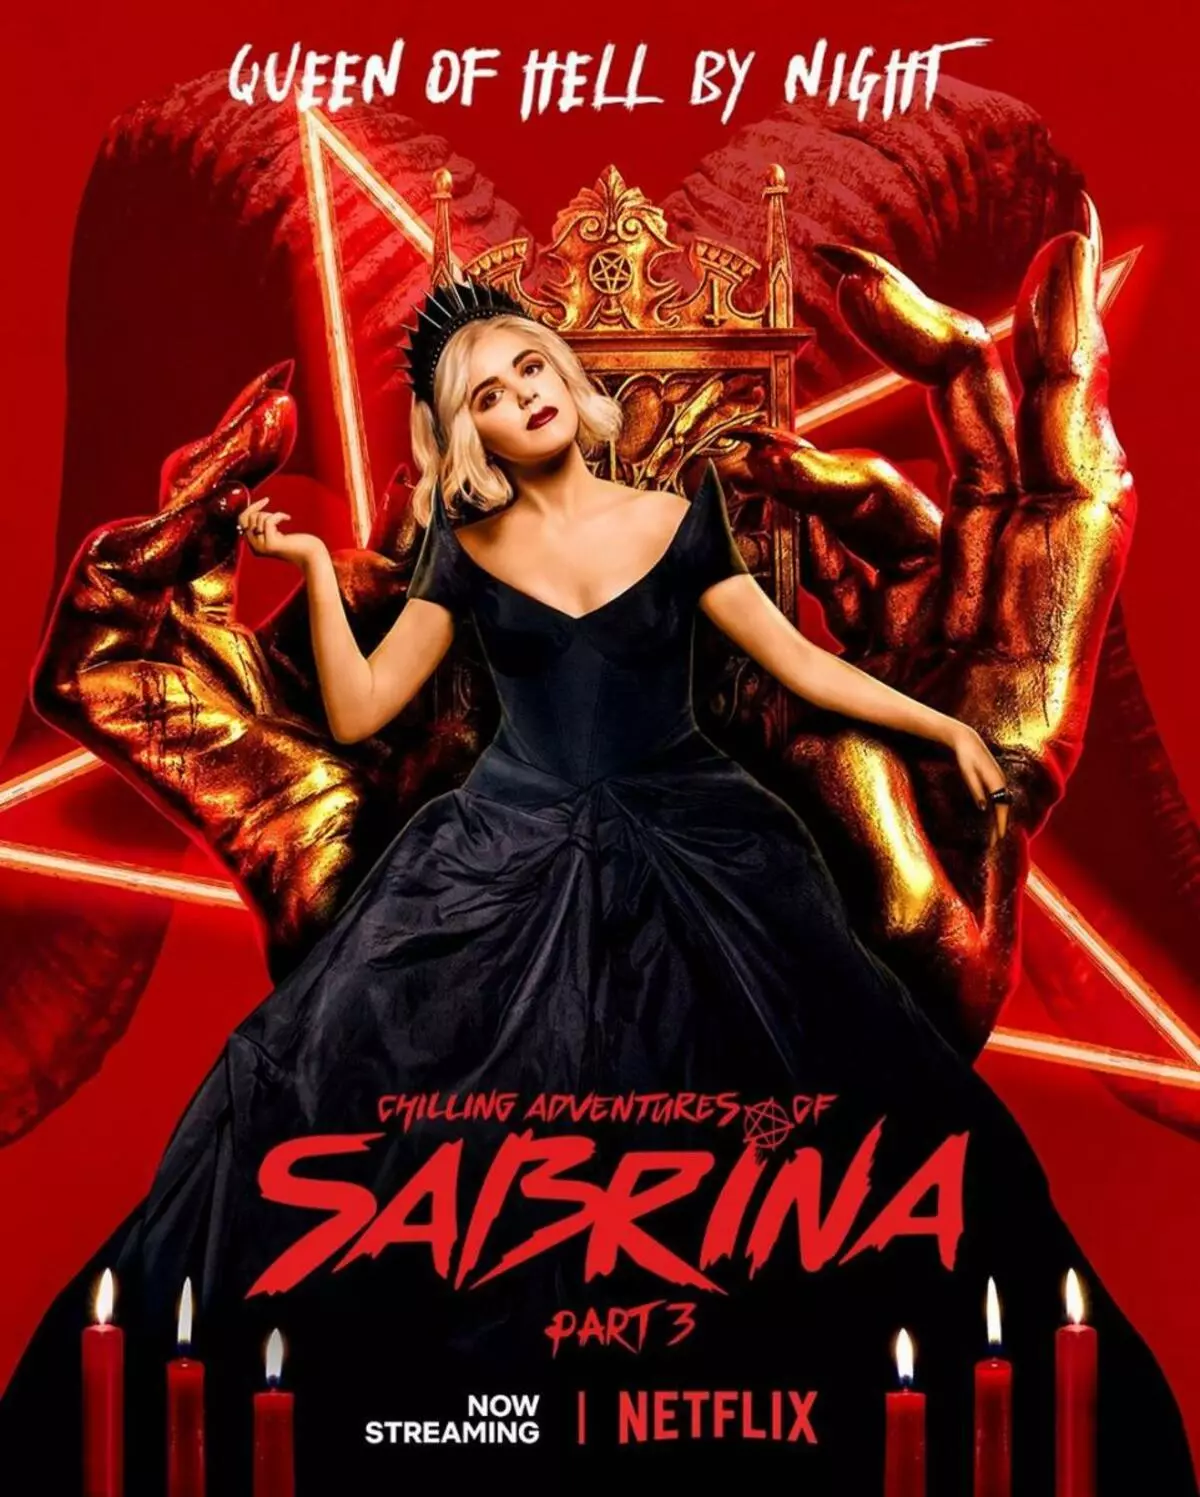 Showranner“Darking Sabrina的冒险经历”暗示了“Riverdale”的交叉 127072_2